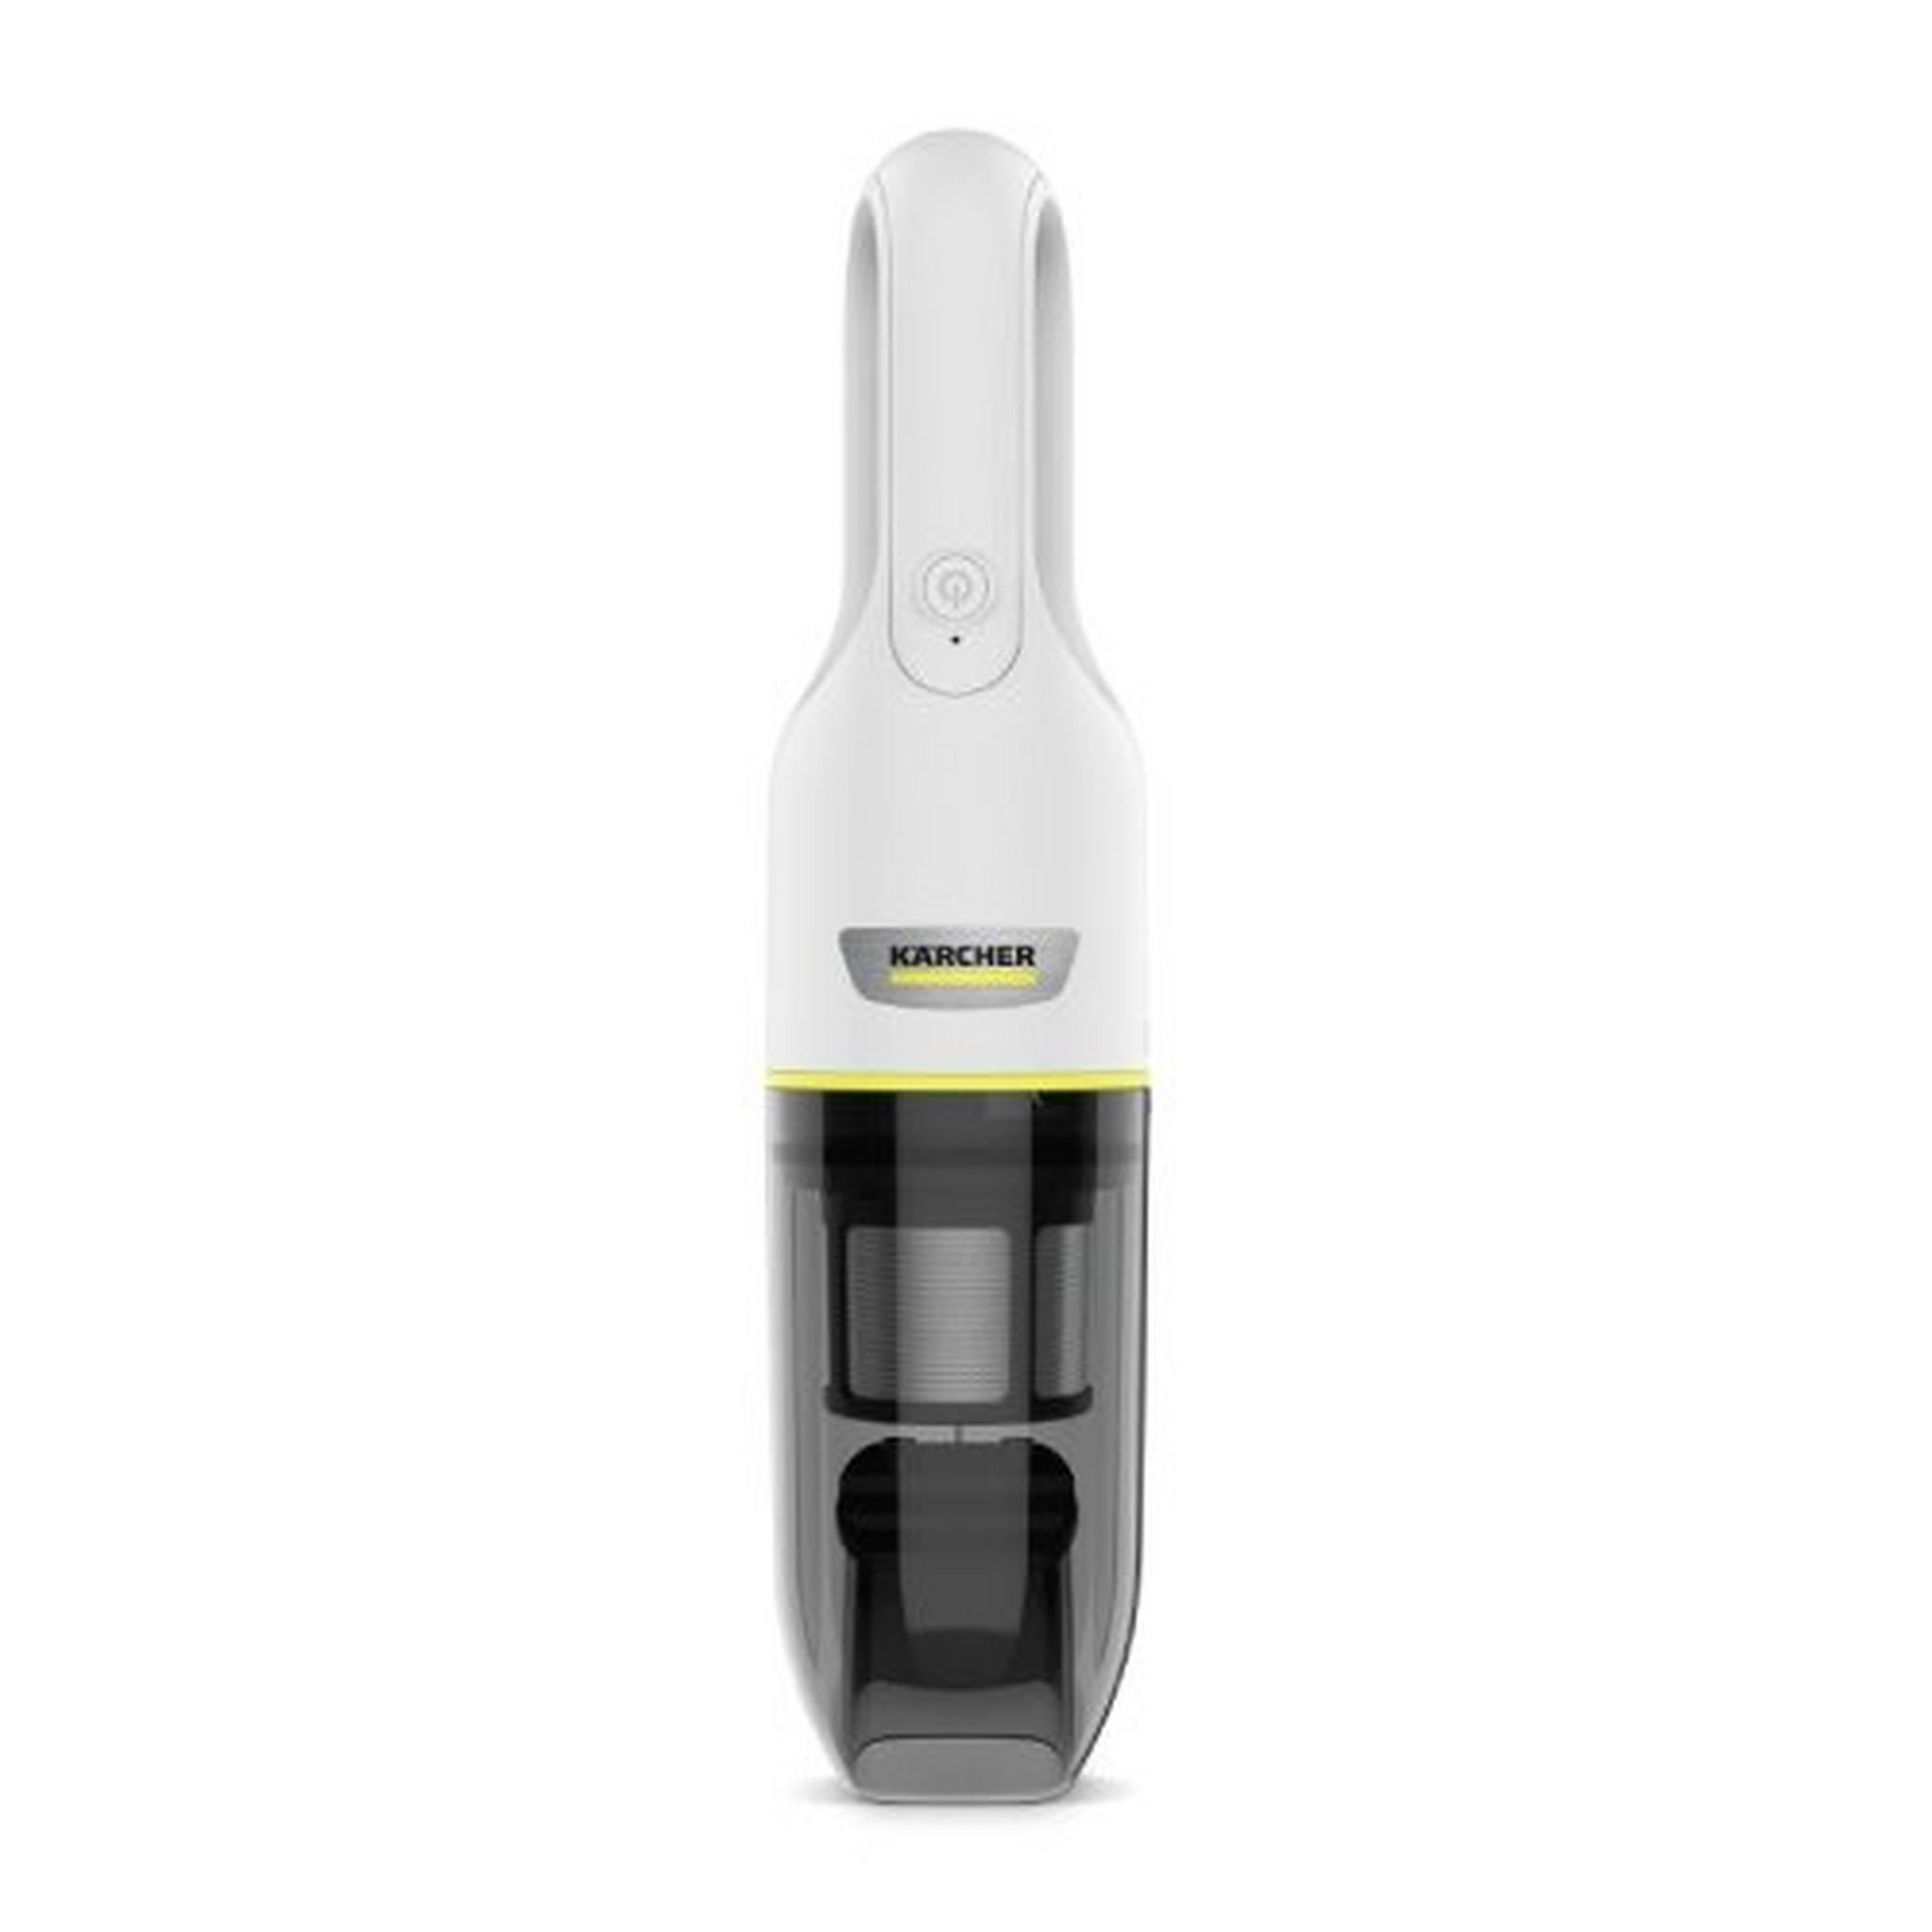 Karcher Handheld Vacuum Cleaner, VCH 2 - White